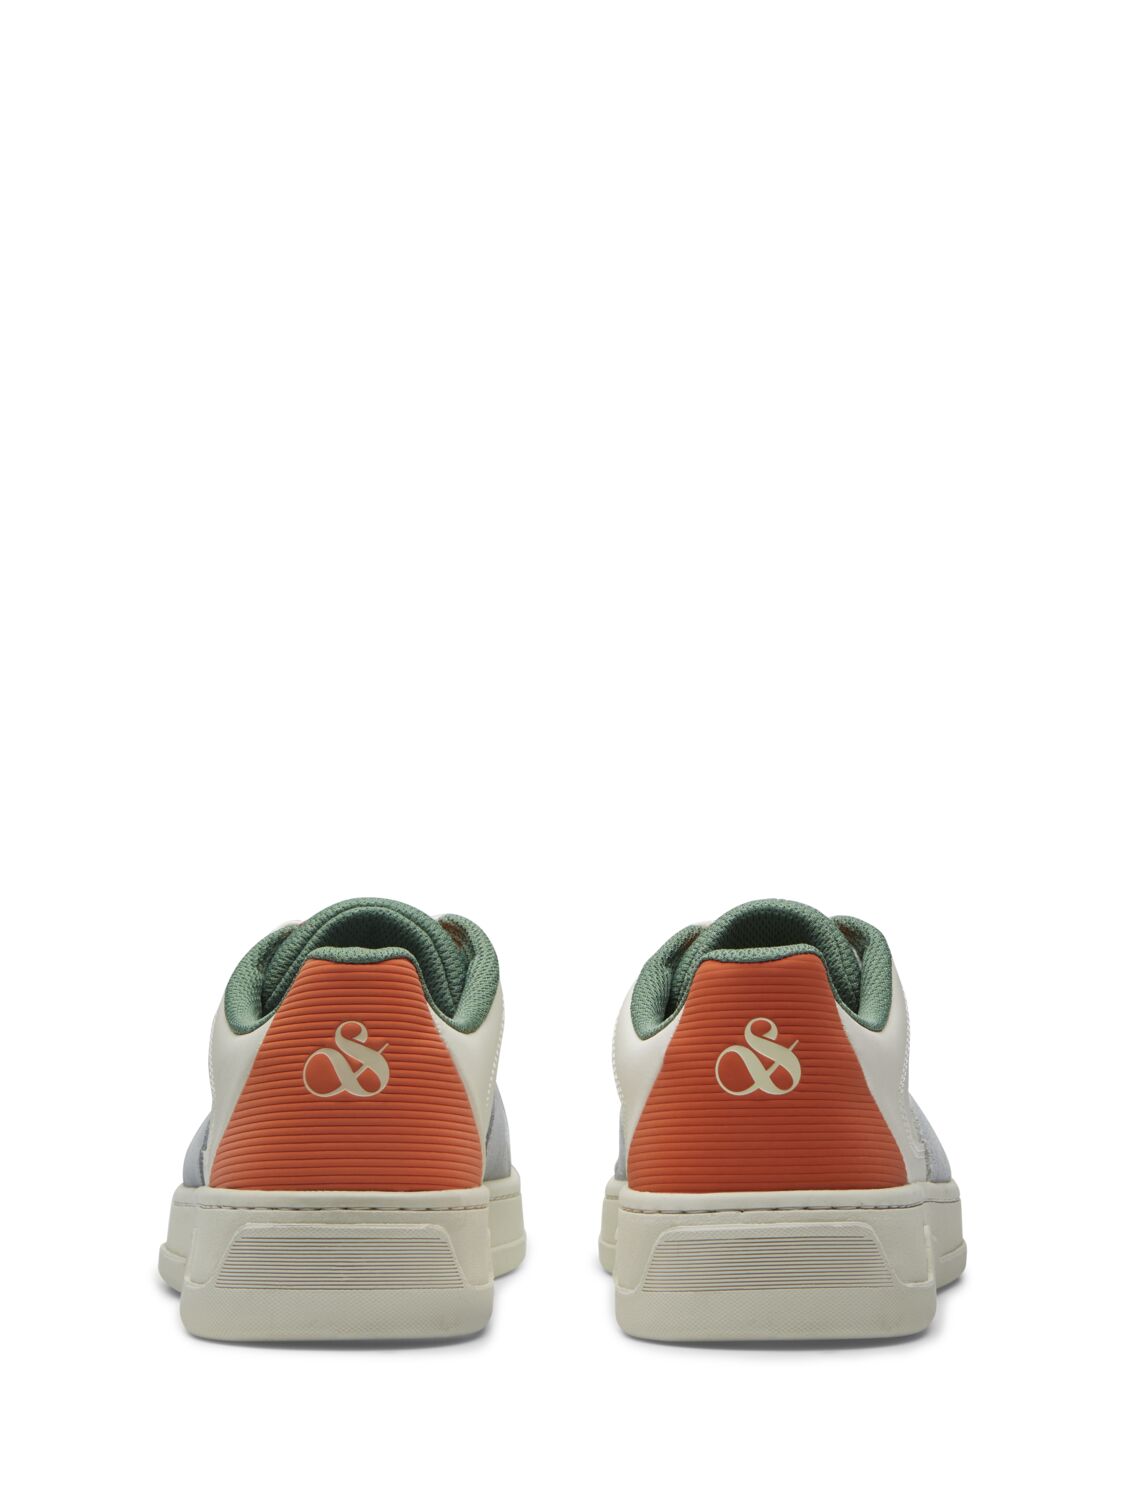 Scotch & Soda - Elliot Sneaker - White/Orange/Green